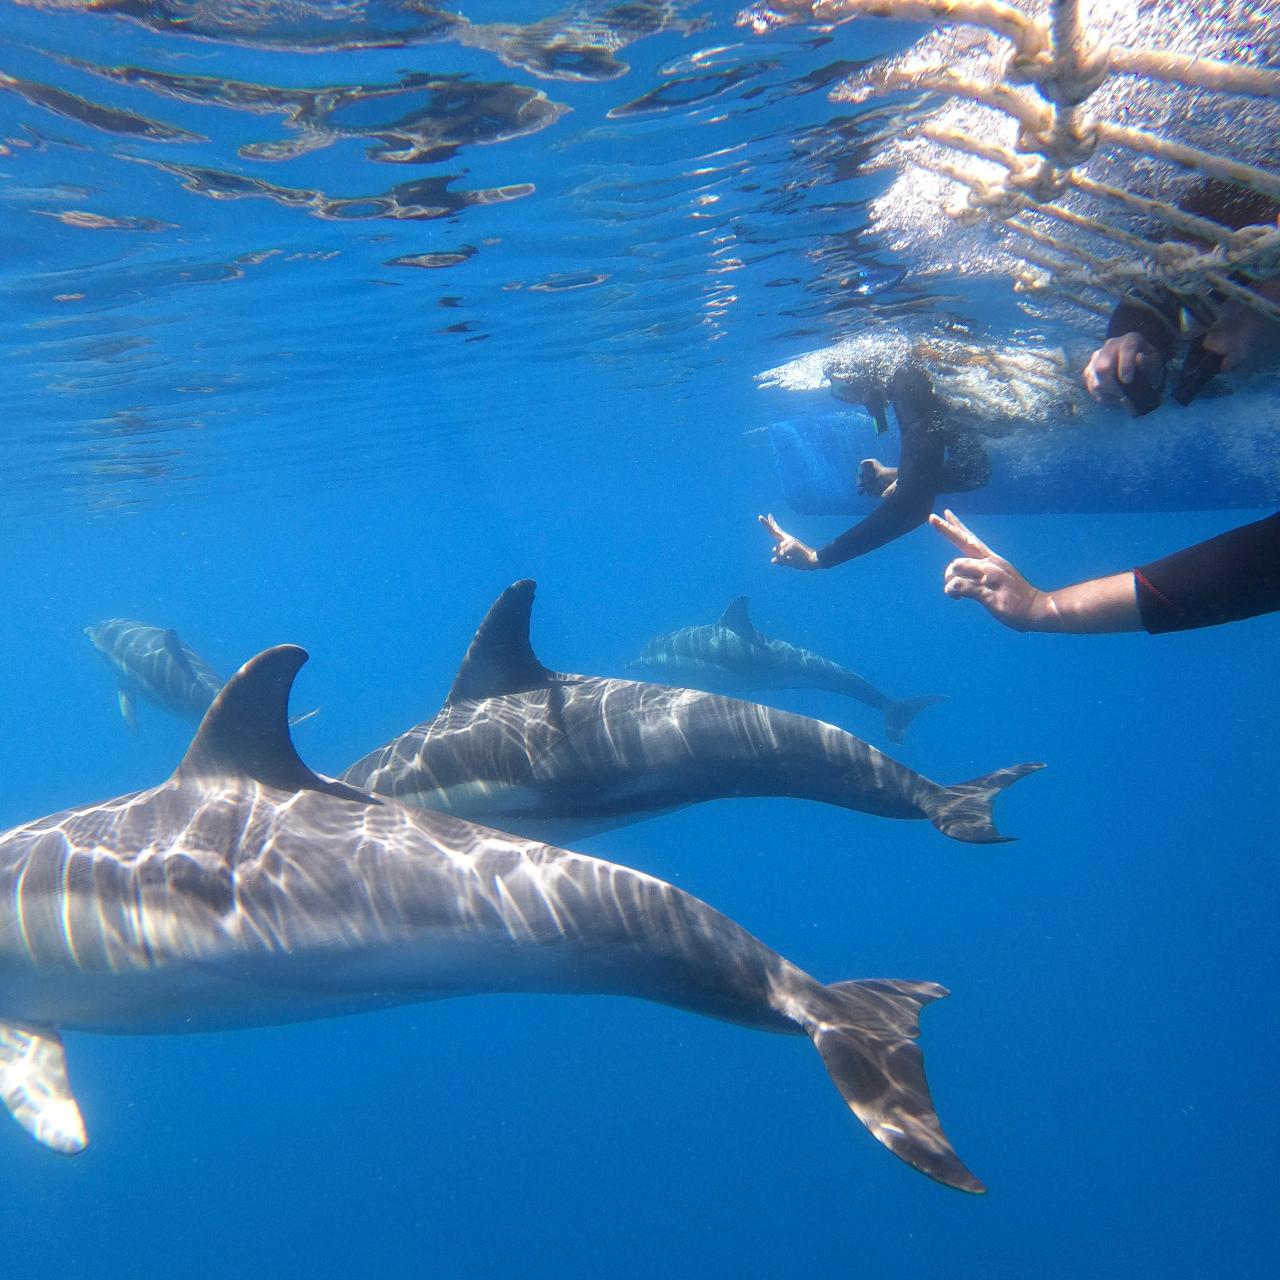 Wild Dolphin Swim Gift Voucher - OFF PEAK SEASON